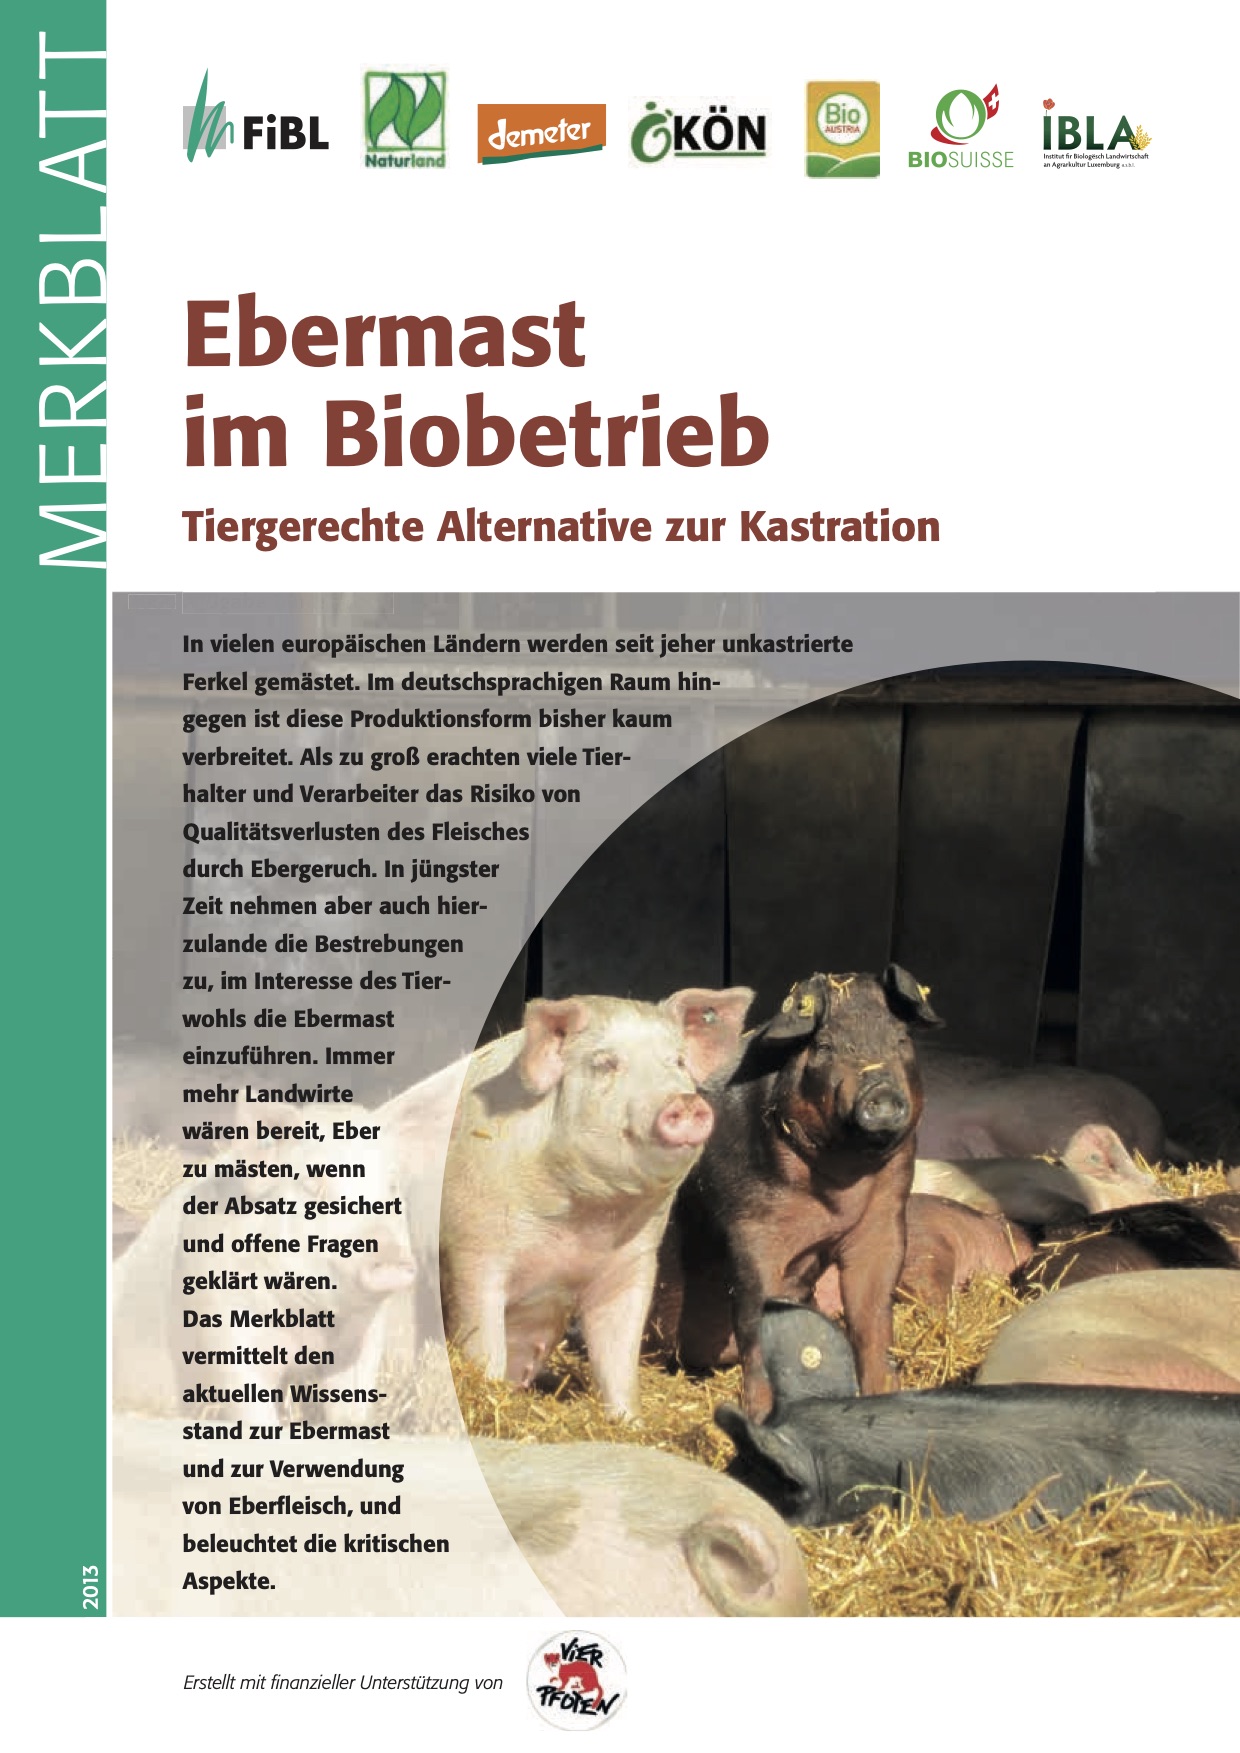 Boar fattening on organic farms: animal-friendly alternative to castration